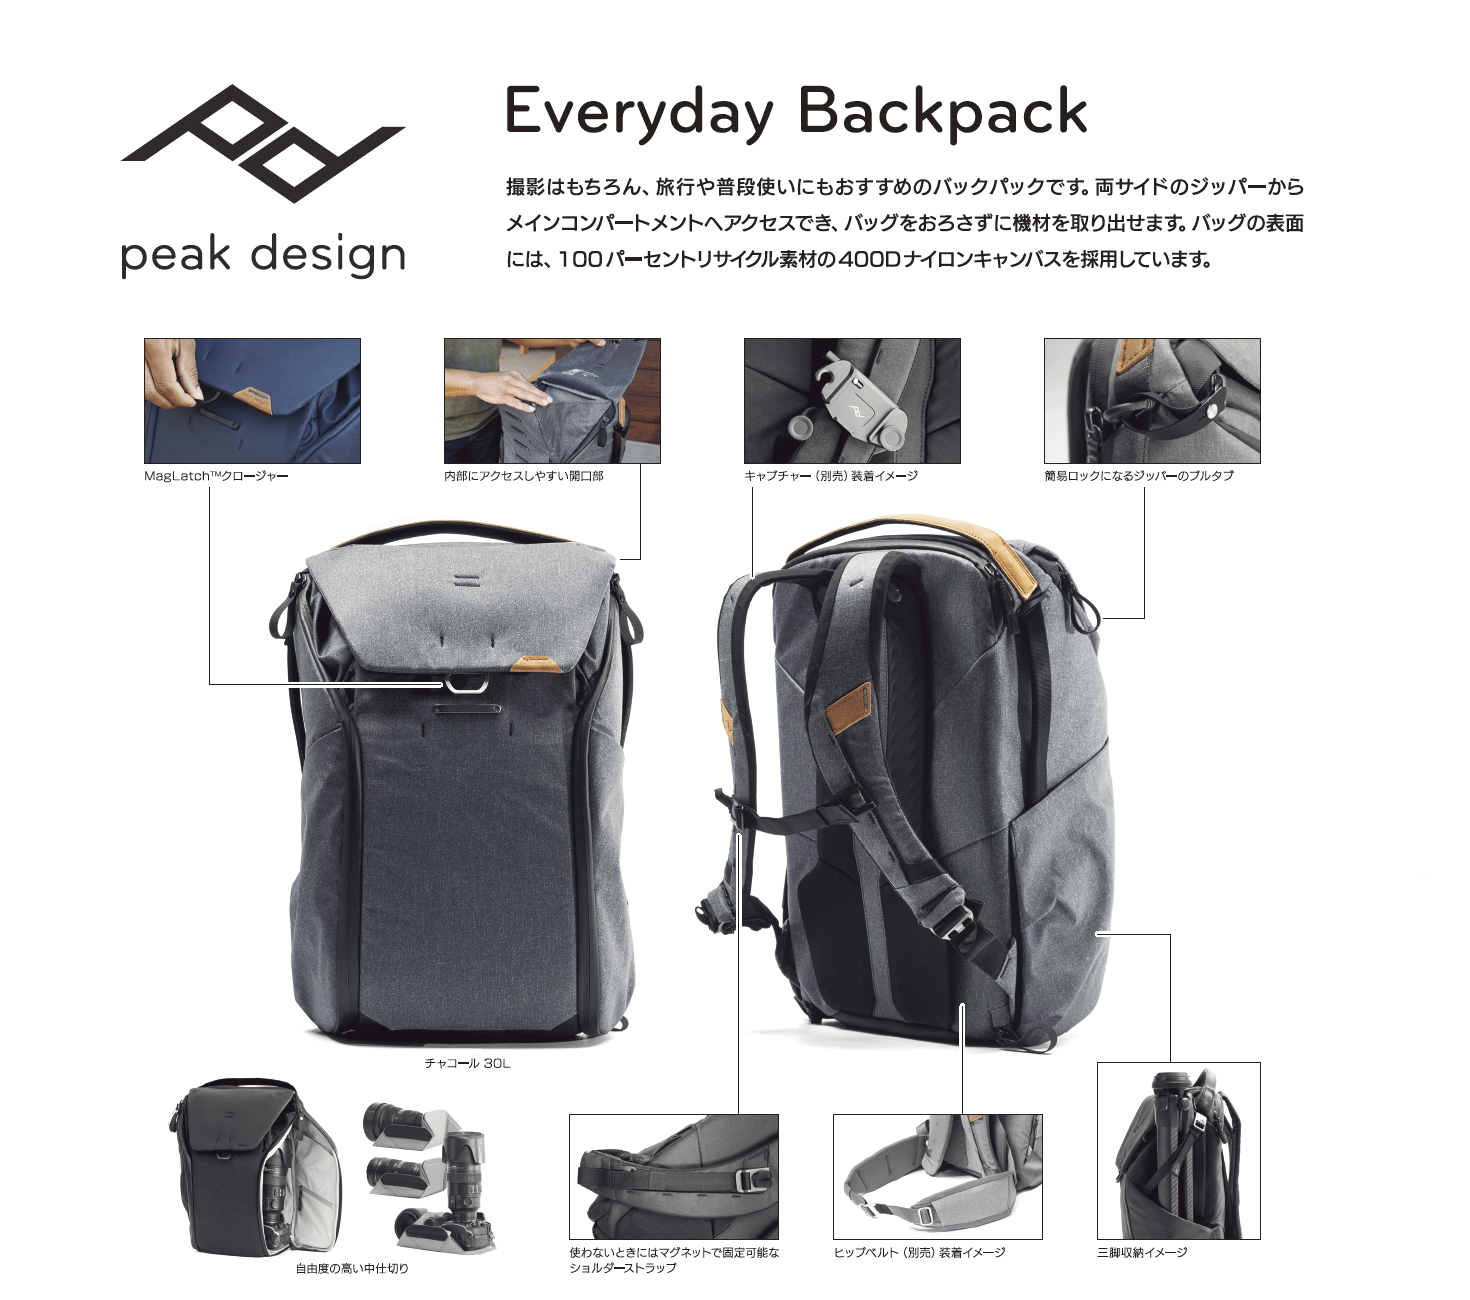 Peak Design EverydayBackpack 30L ピークデザイン